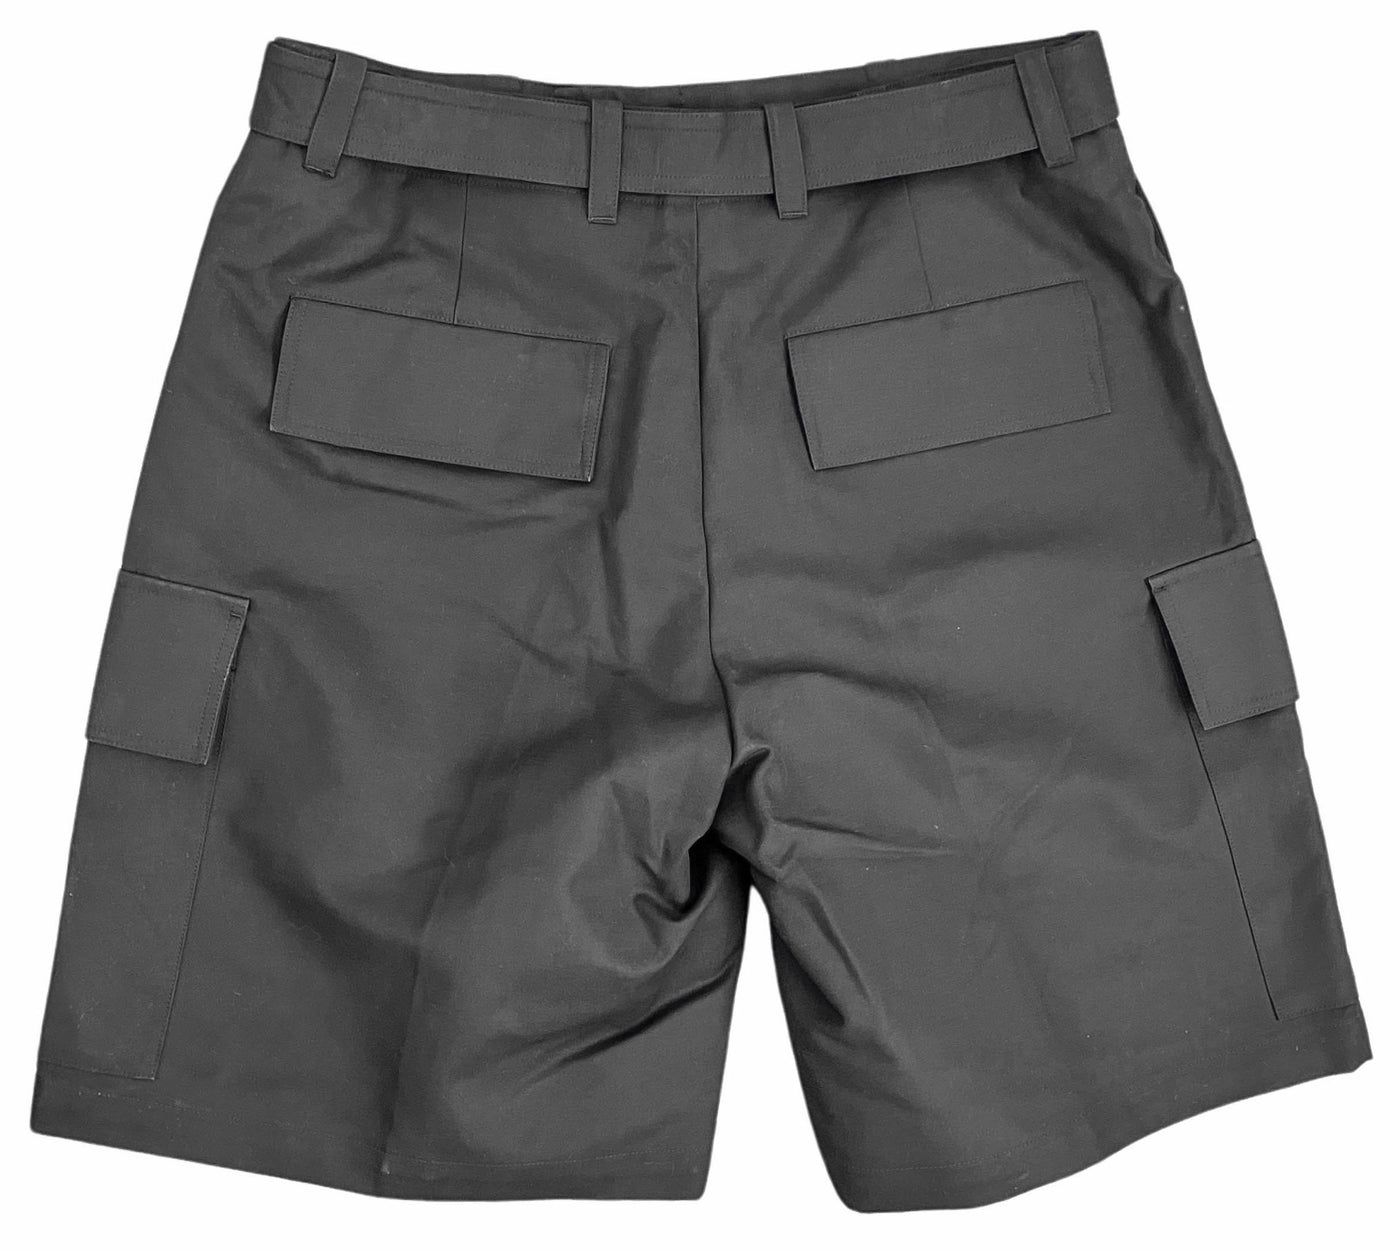 Jil Sander Double Cotton Cargo Shorts in Black - Discounts on Jil Sander at UAL